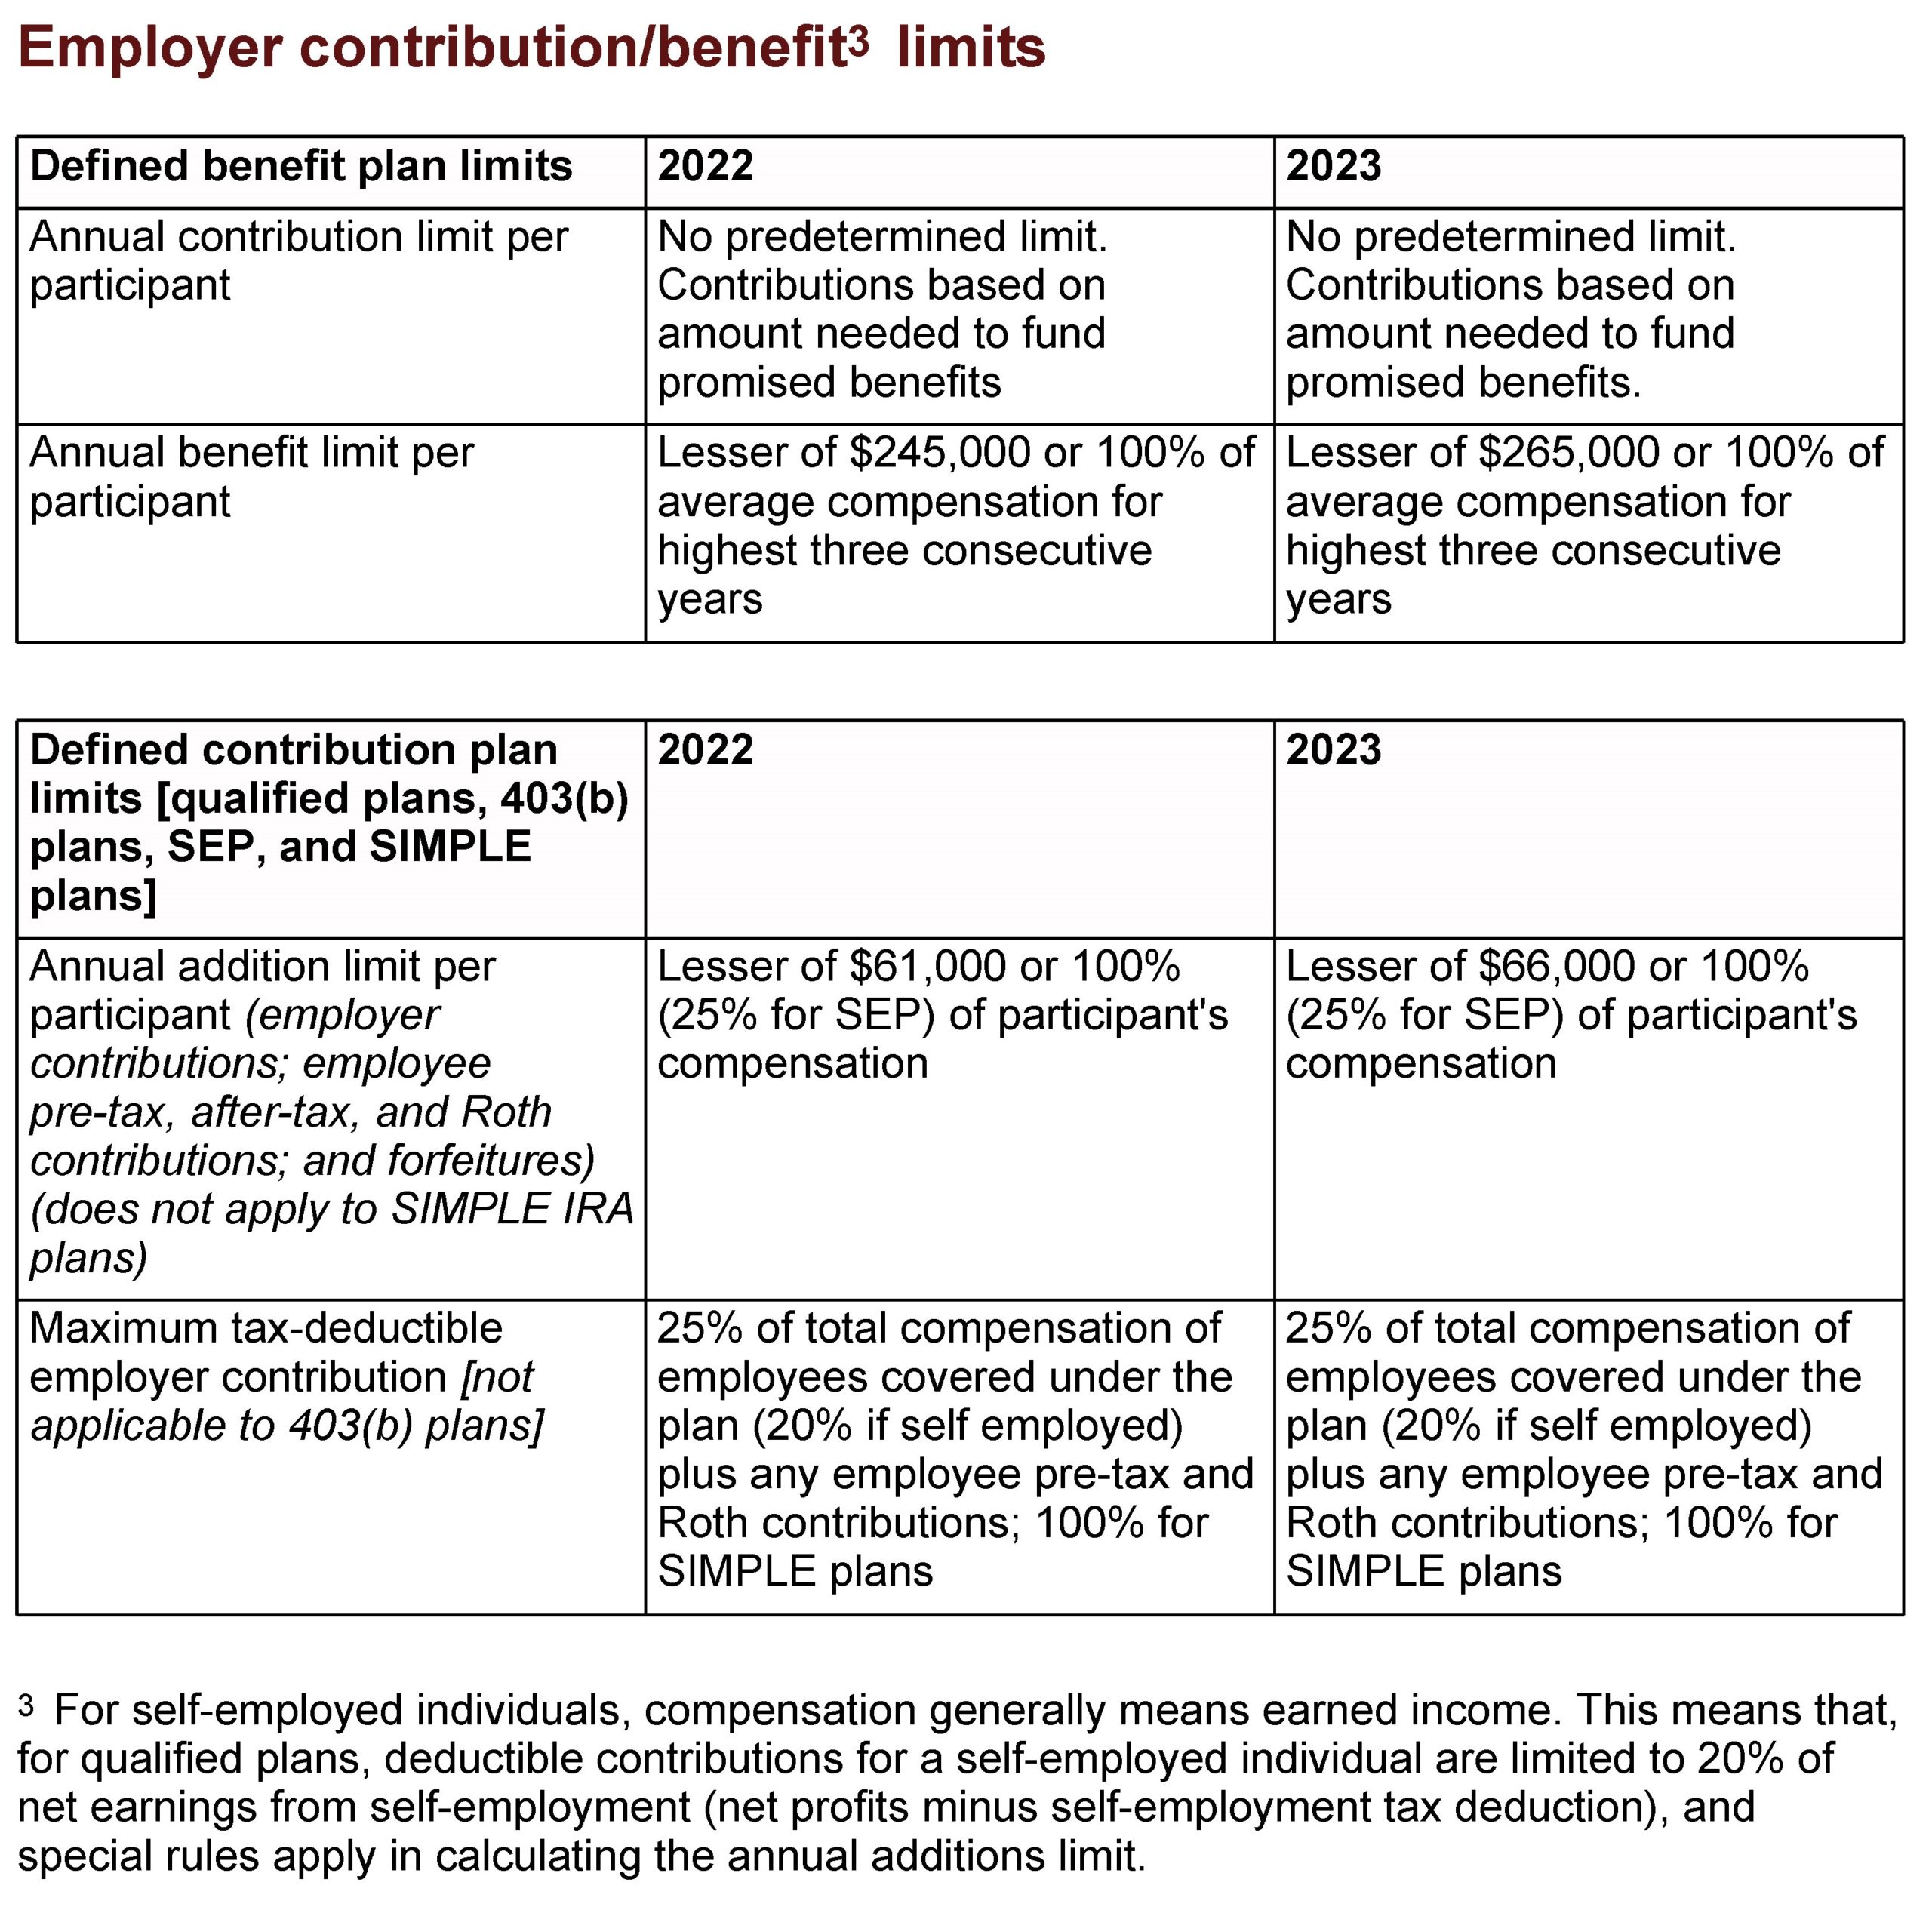 Employer Contribution/Benefits Limits